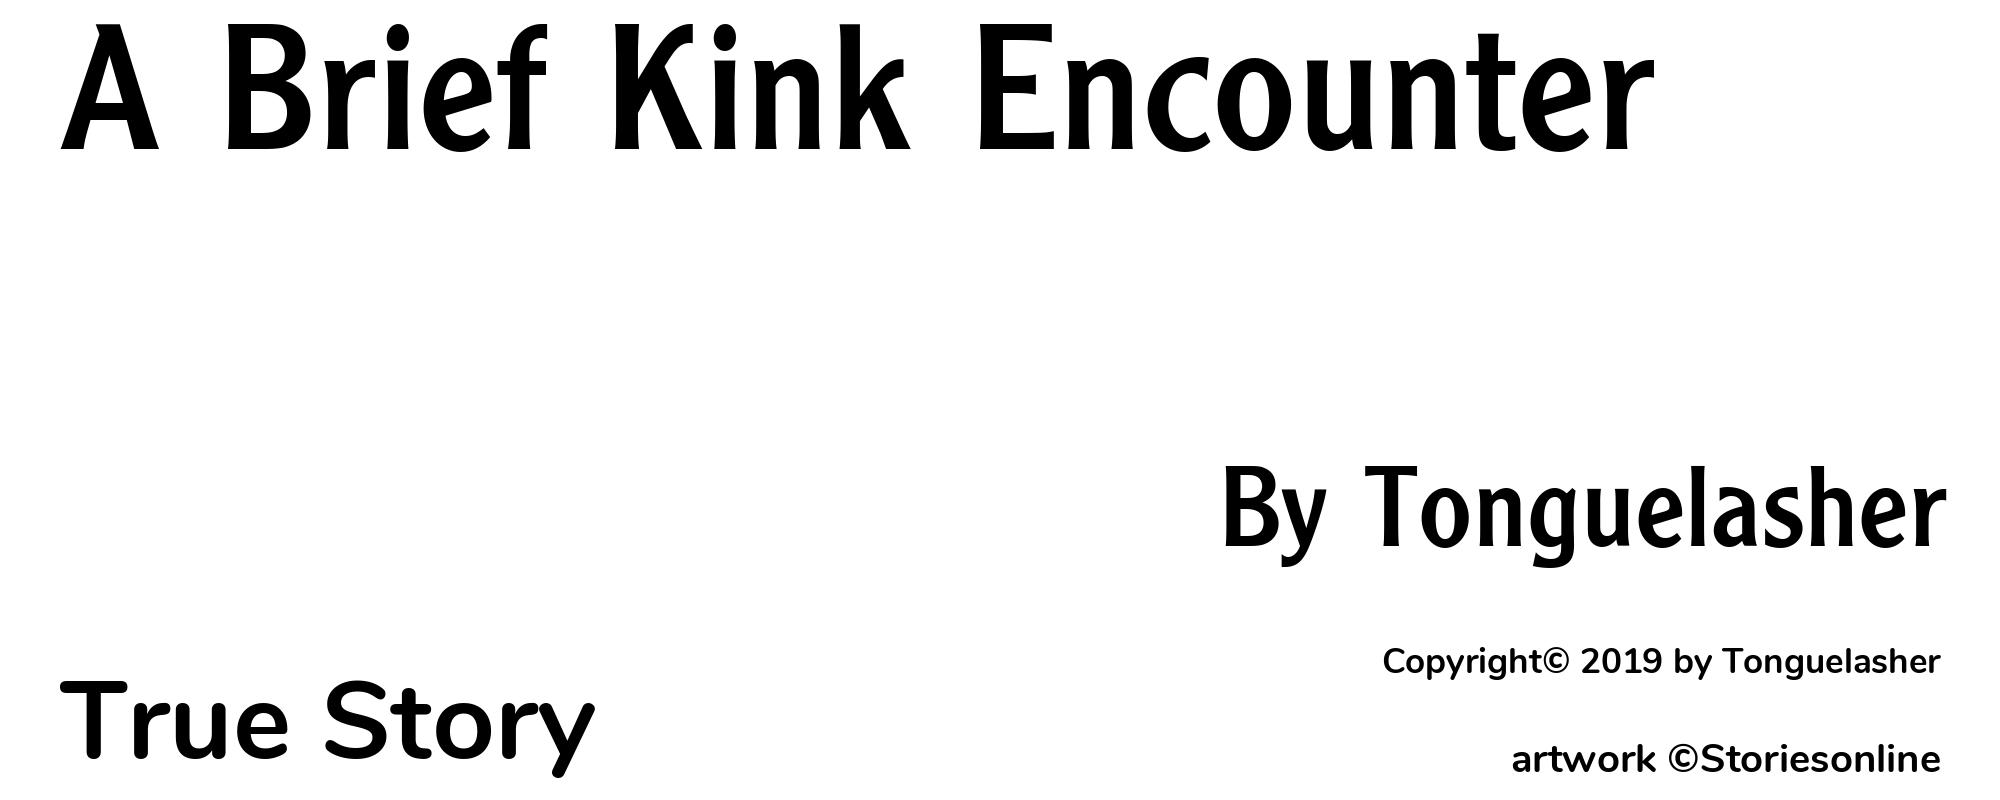 A Brief Kink Encounter - Cover